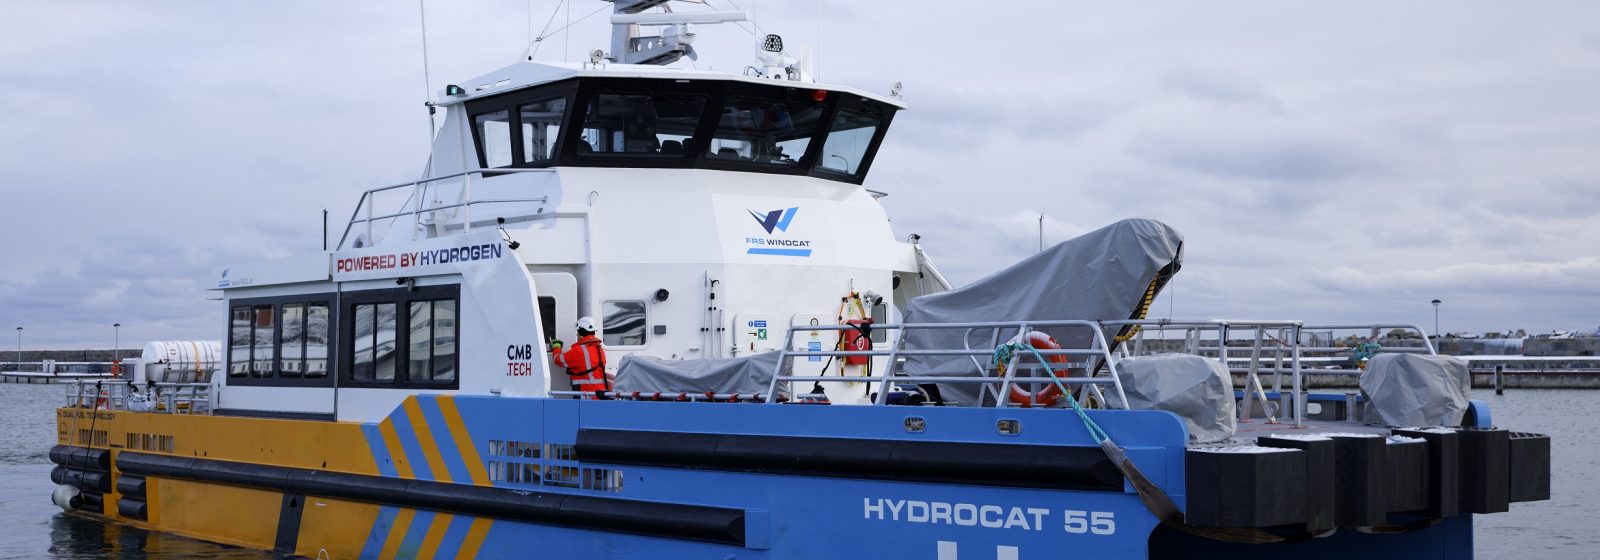 Crew Transfer Vessel 'Hydrocat 55'